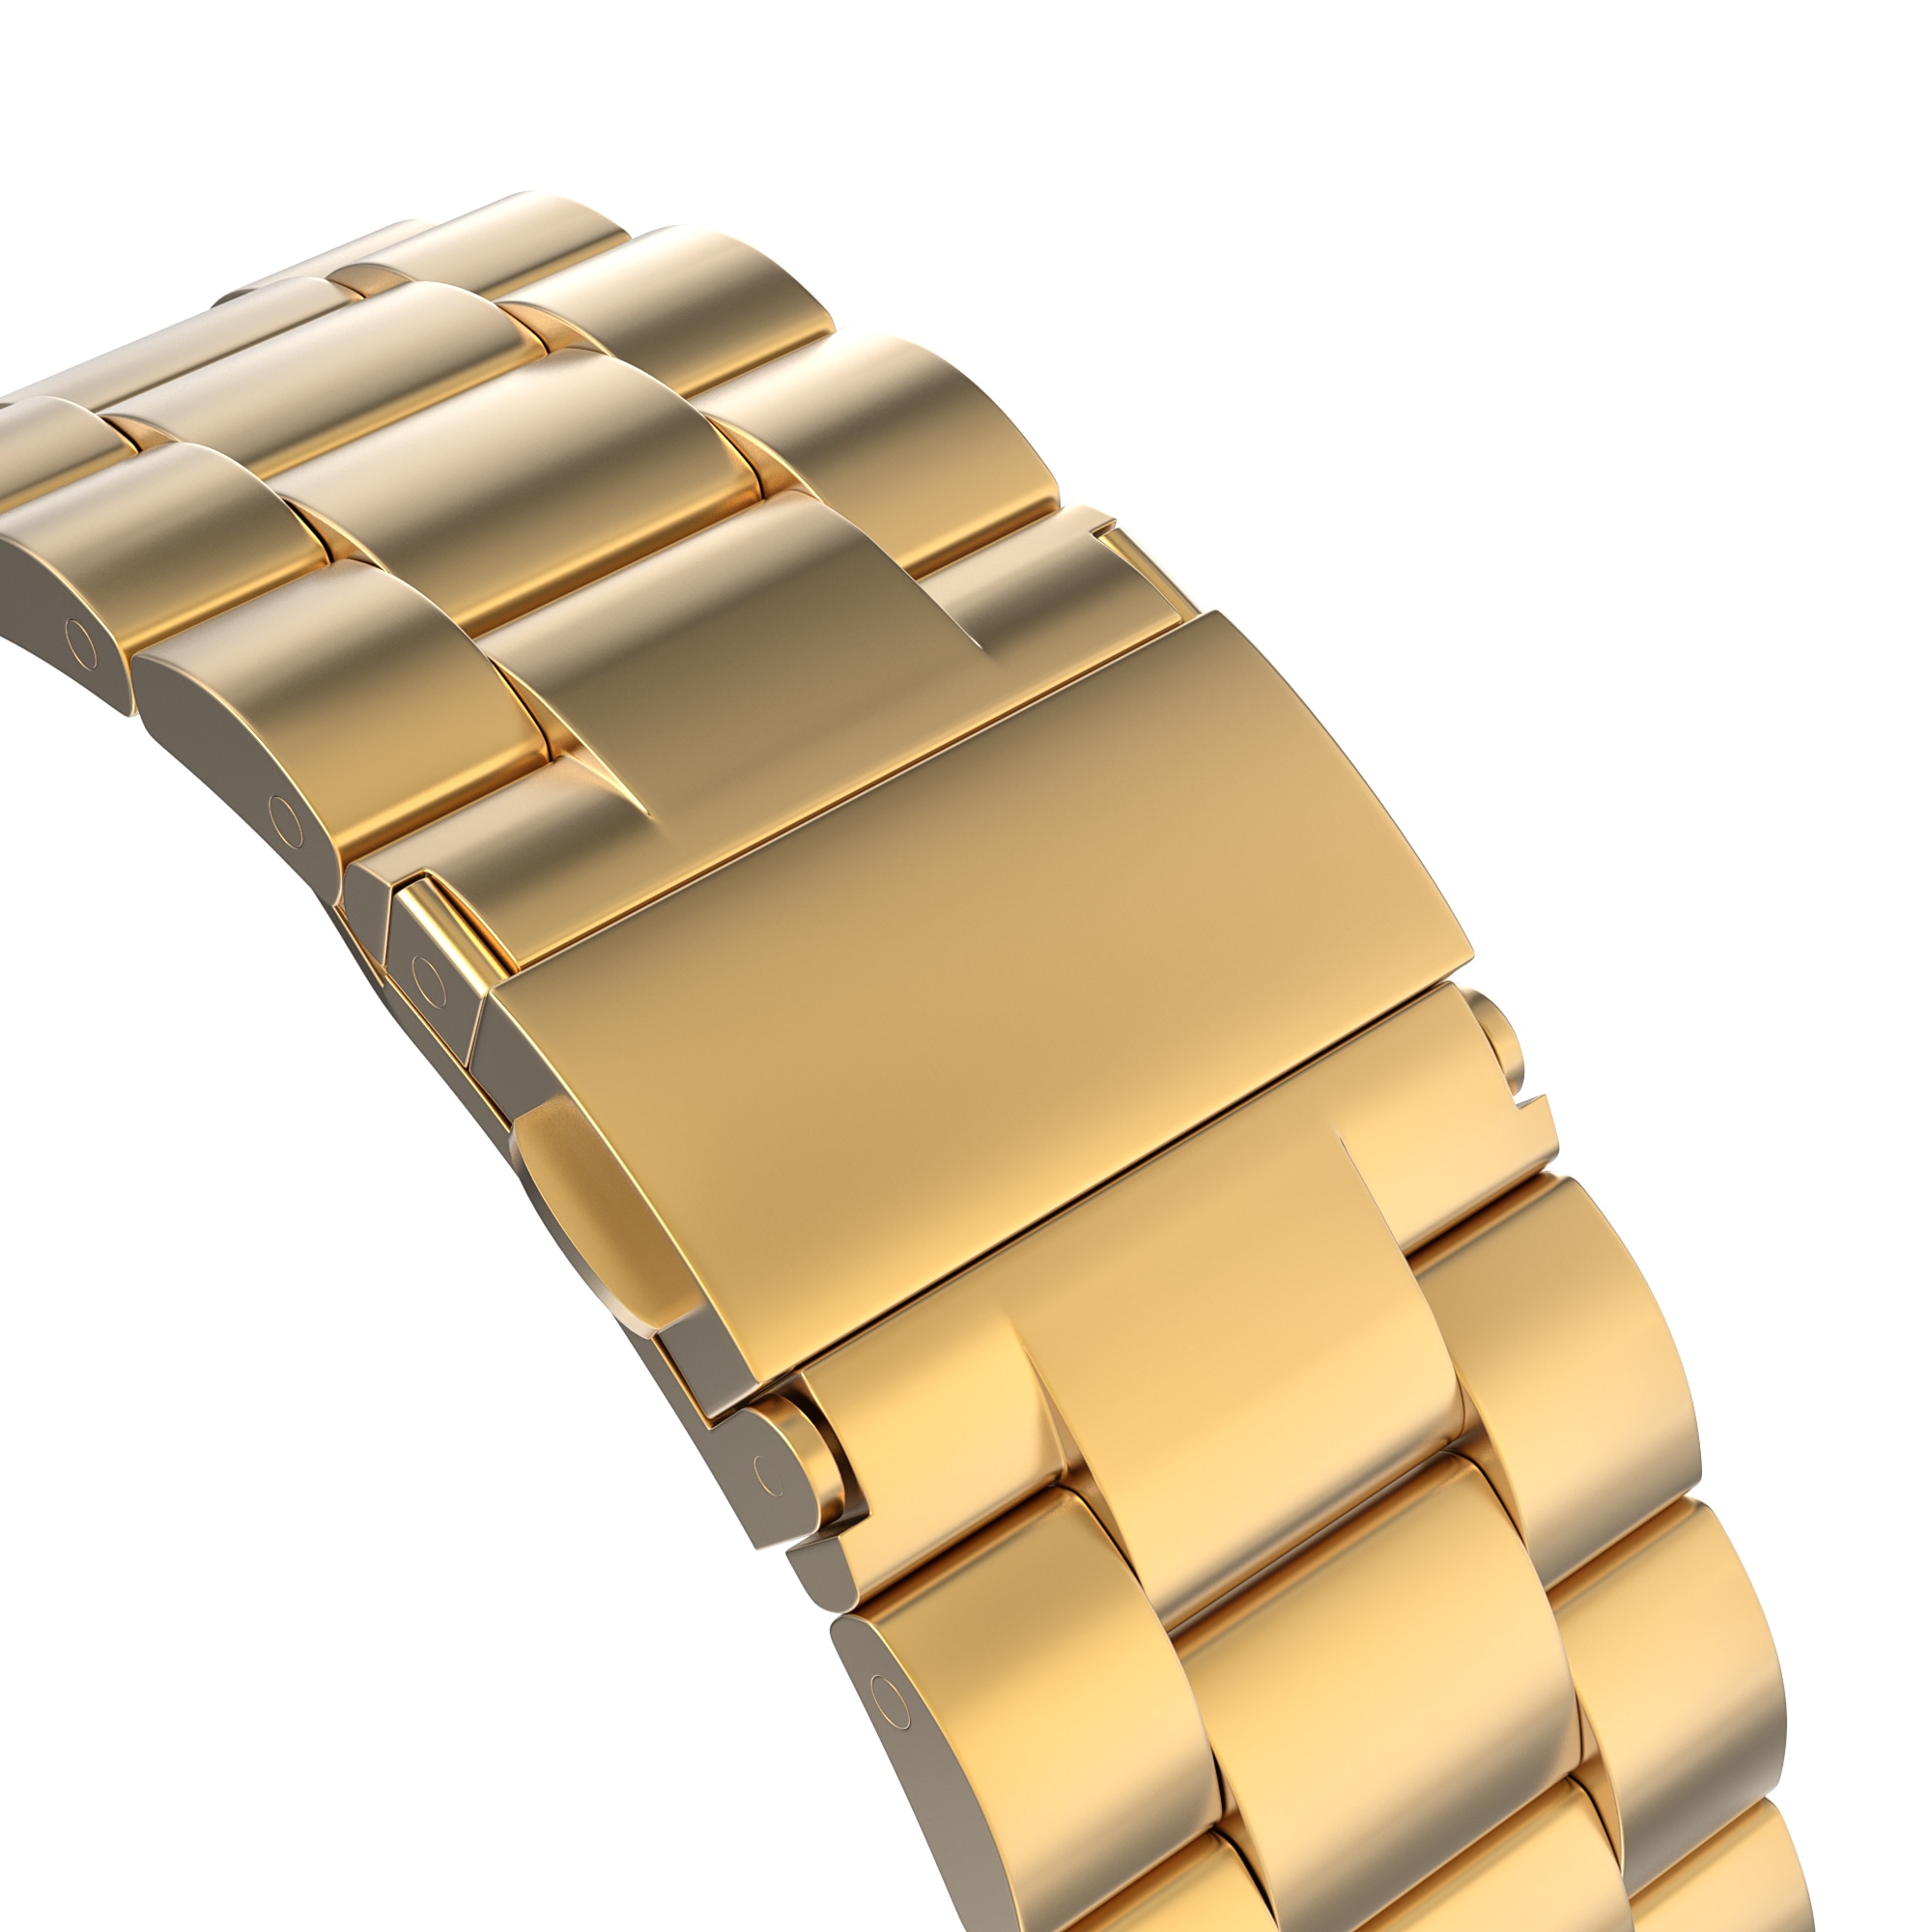 Apple Watch 40mm Armband aus Stahl gold